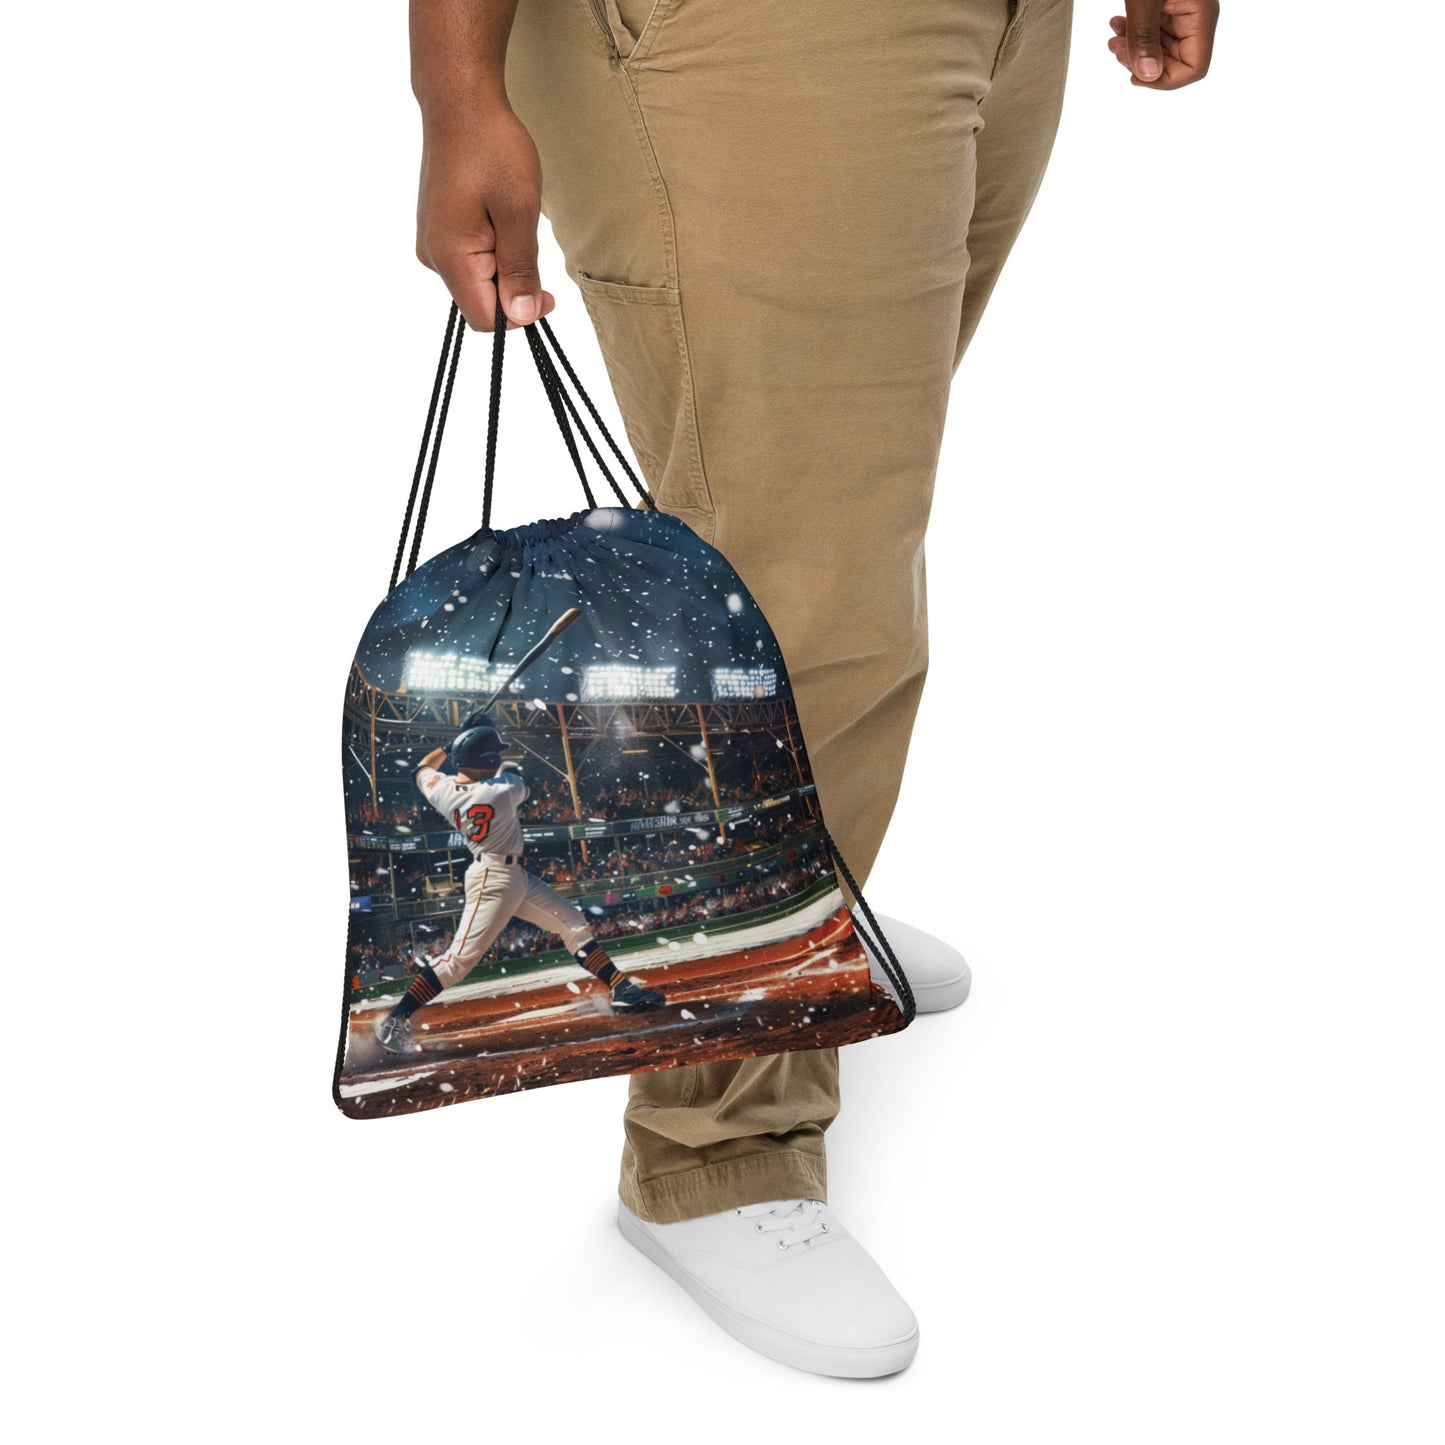 Home Run Drawstring bag